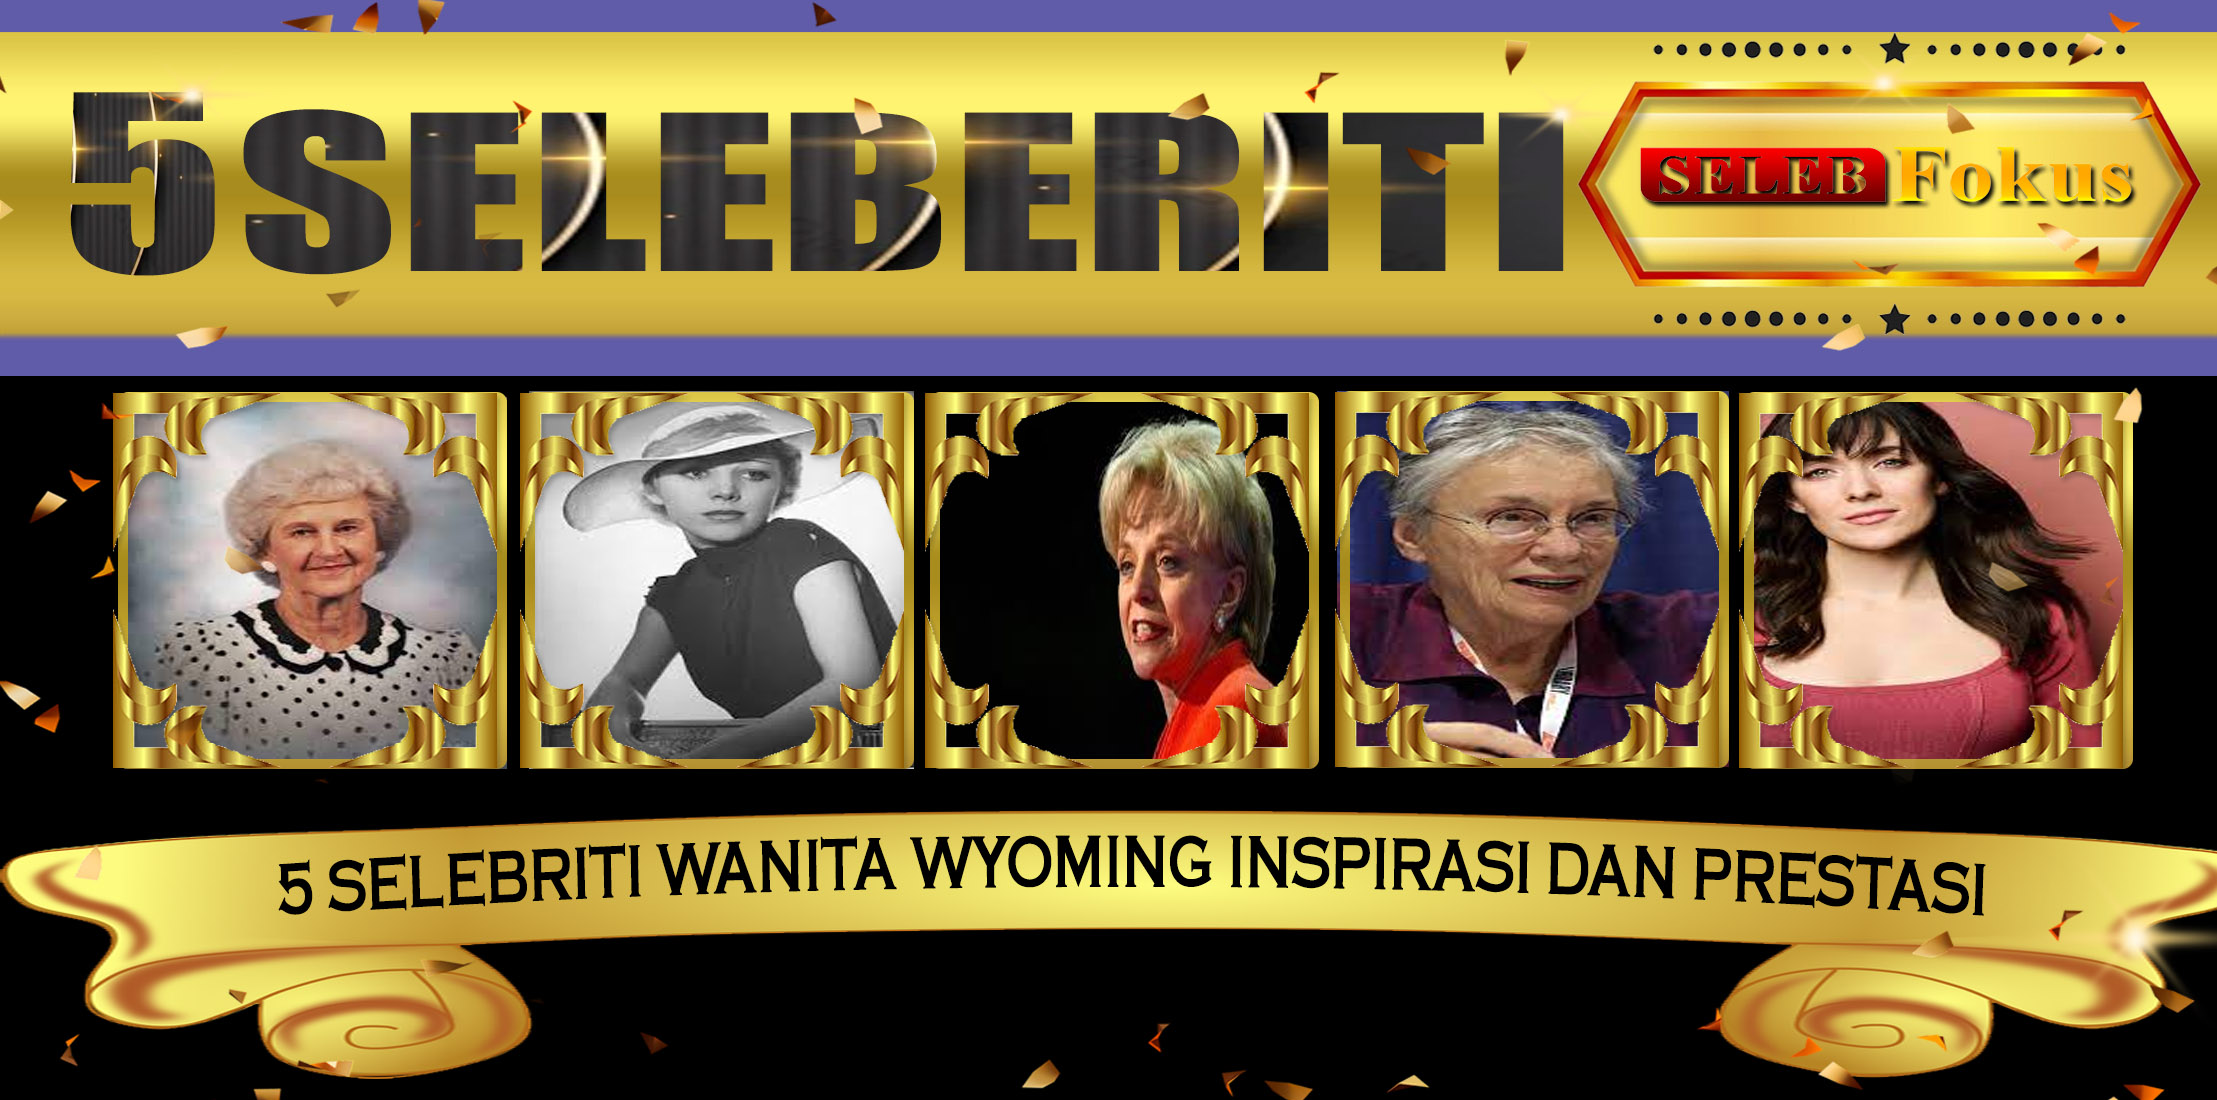 5 Selebriti Wanita Wyoming